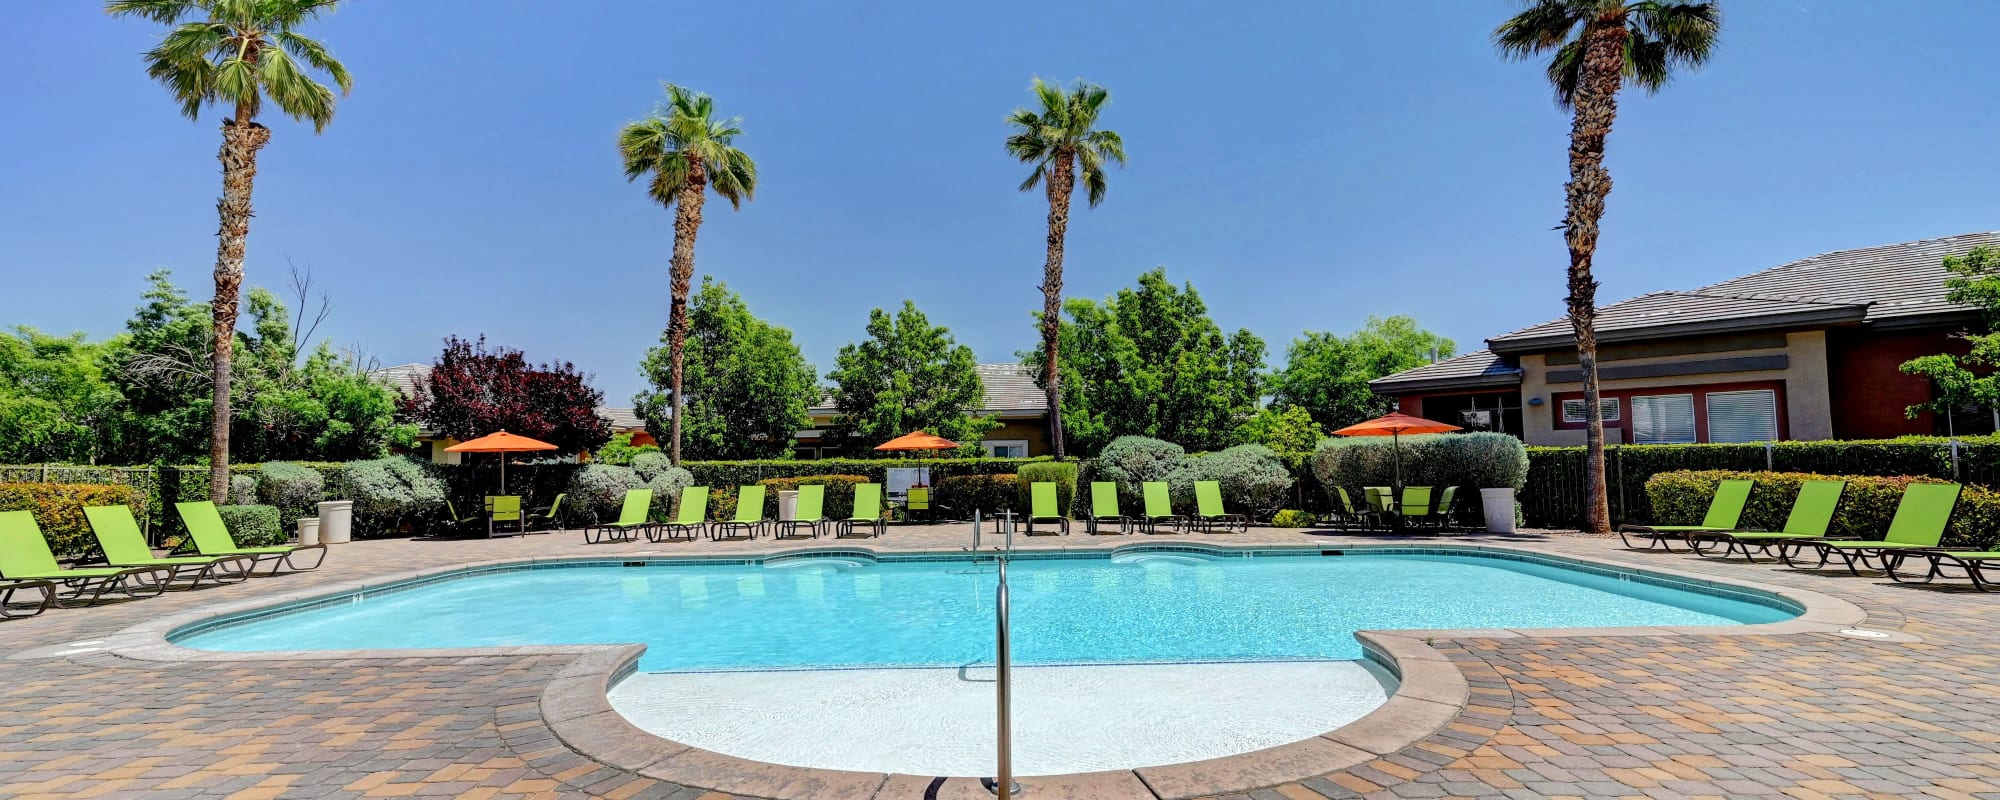 Schedule a tour of Canyon Villas Apartments in Las Vegas, Nevada